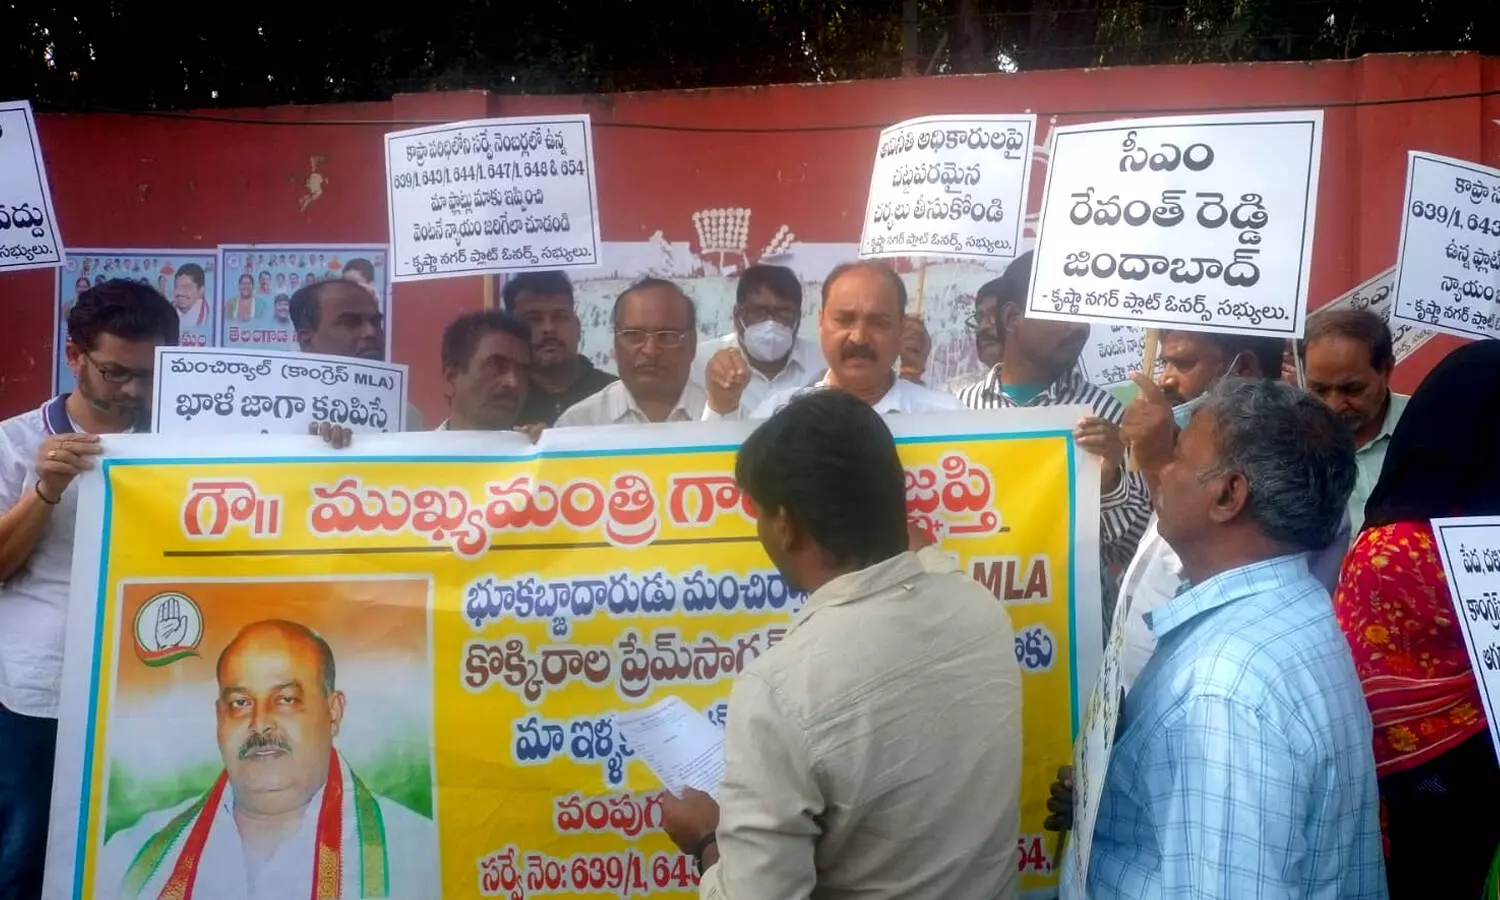 Mancherial residents protest at Praja Bhavan against land grabbing by Congress MLA Prem Sagar Rao